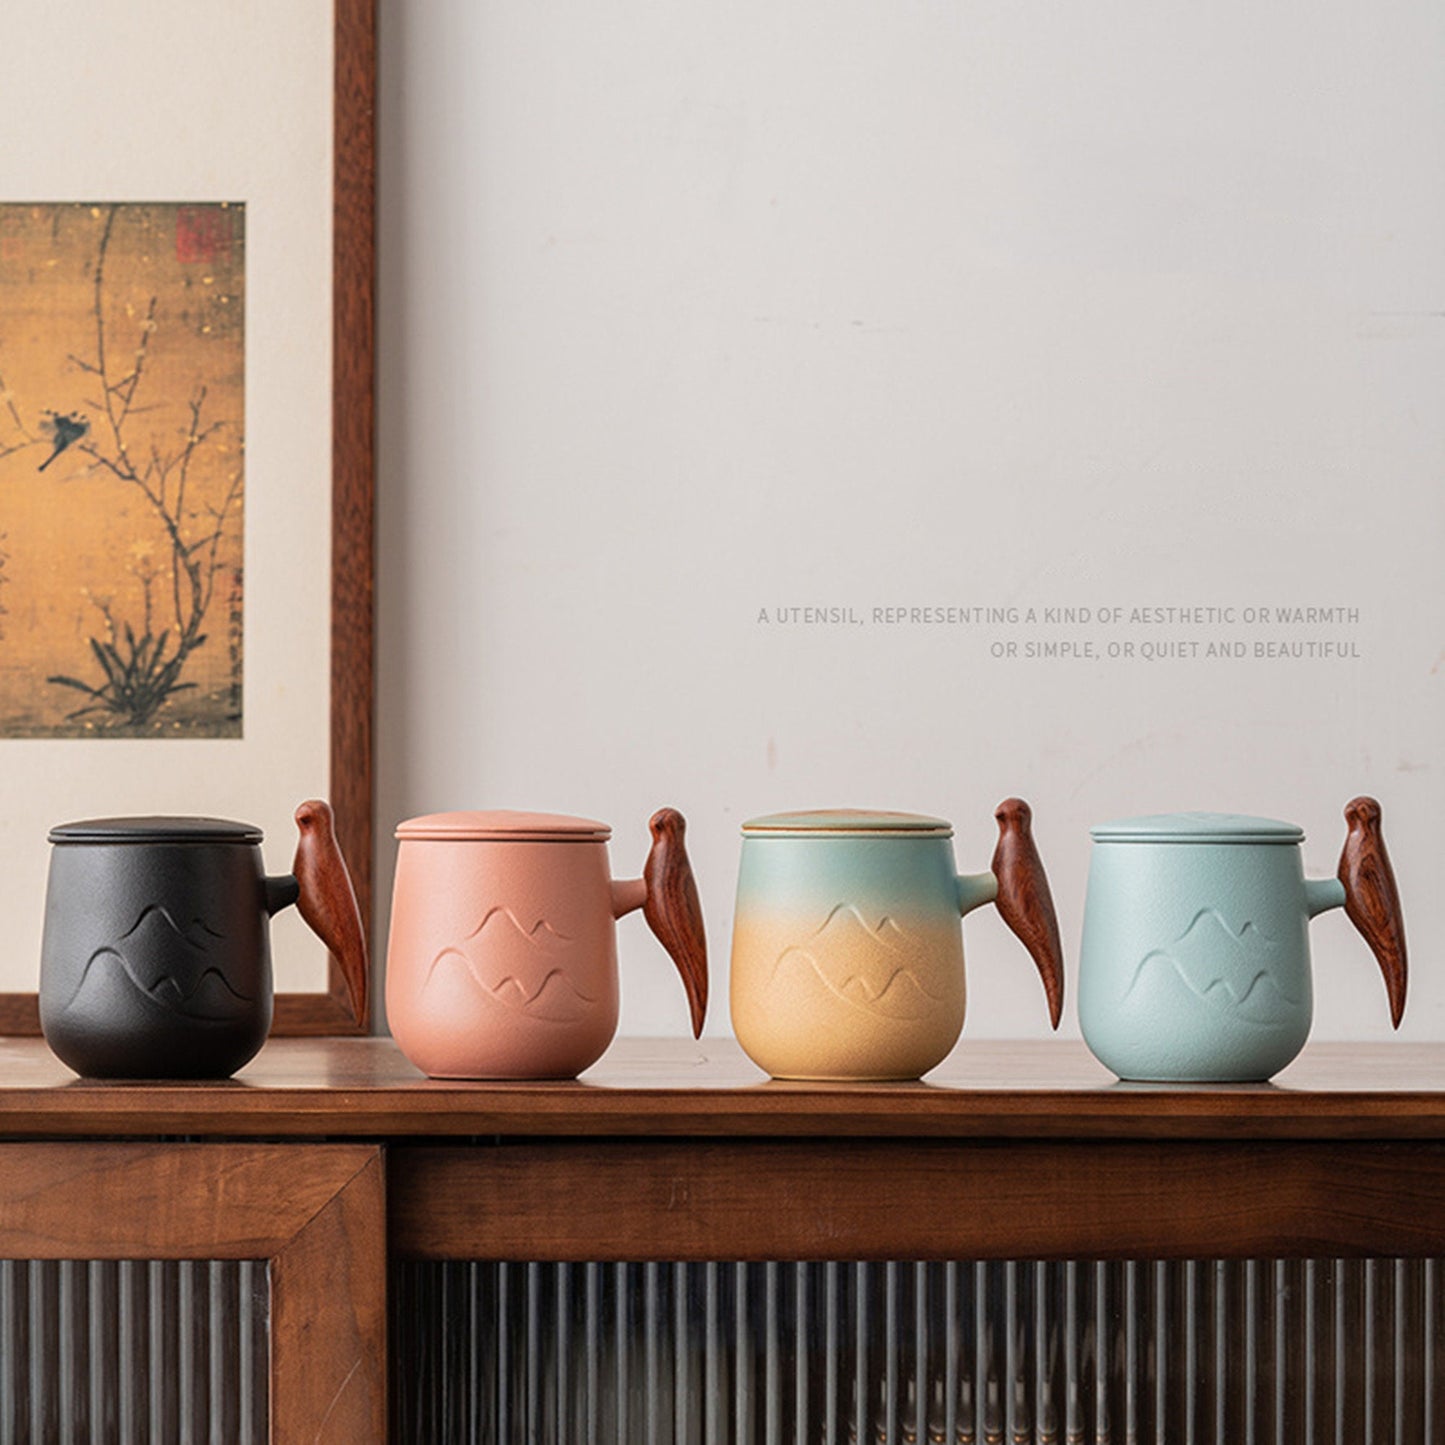 Coffee Mug Pottery Handmade |Japanese Mug With Lid and Wooden Handle|Tea Cup With Filter|Ceramic Tea Mugs |Mountain Coffee Tea Cup 400ml